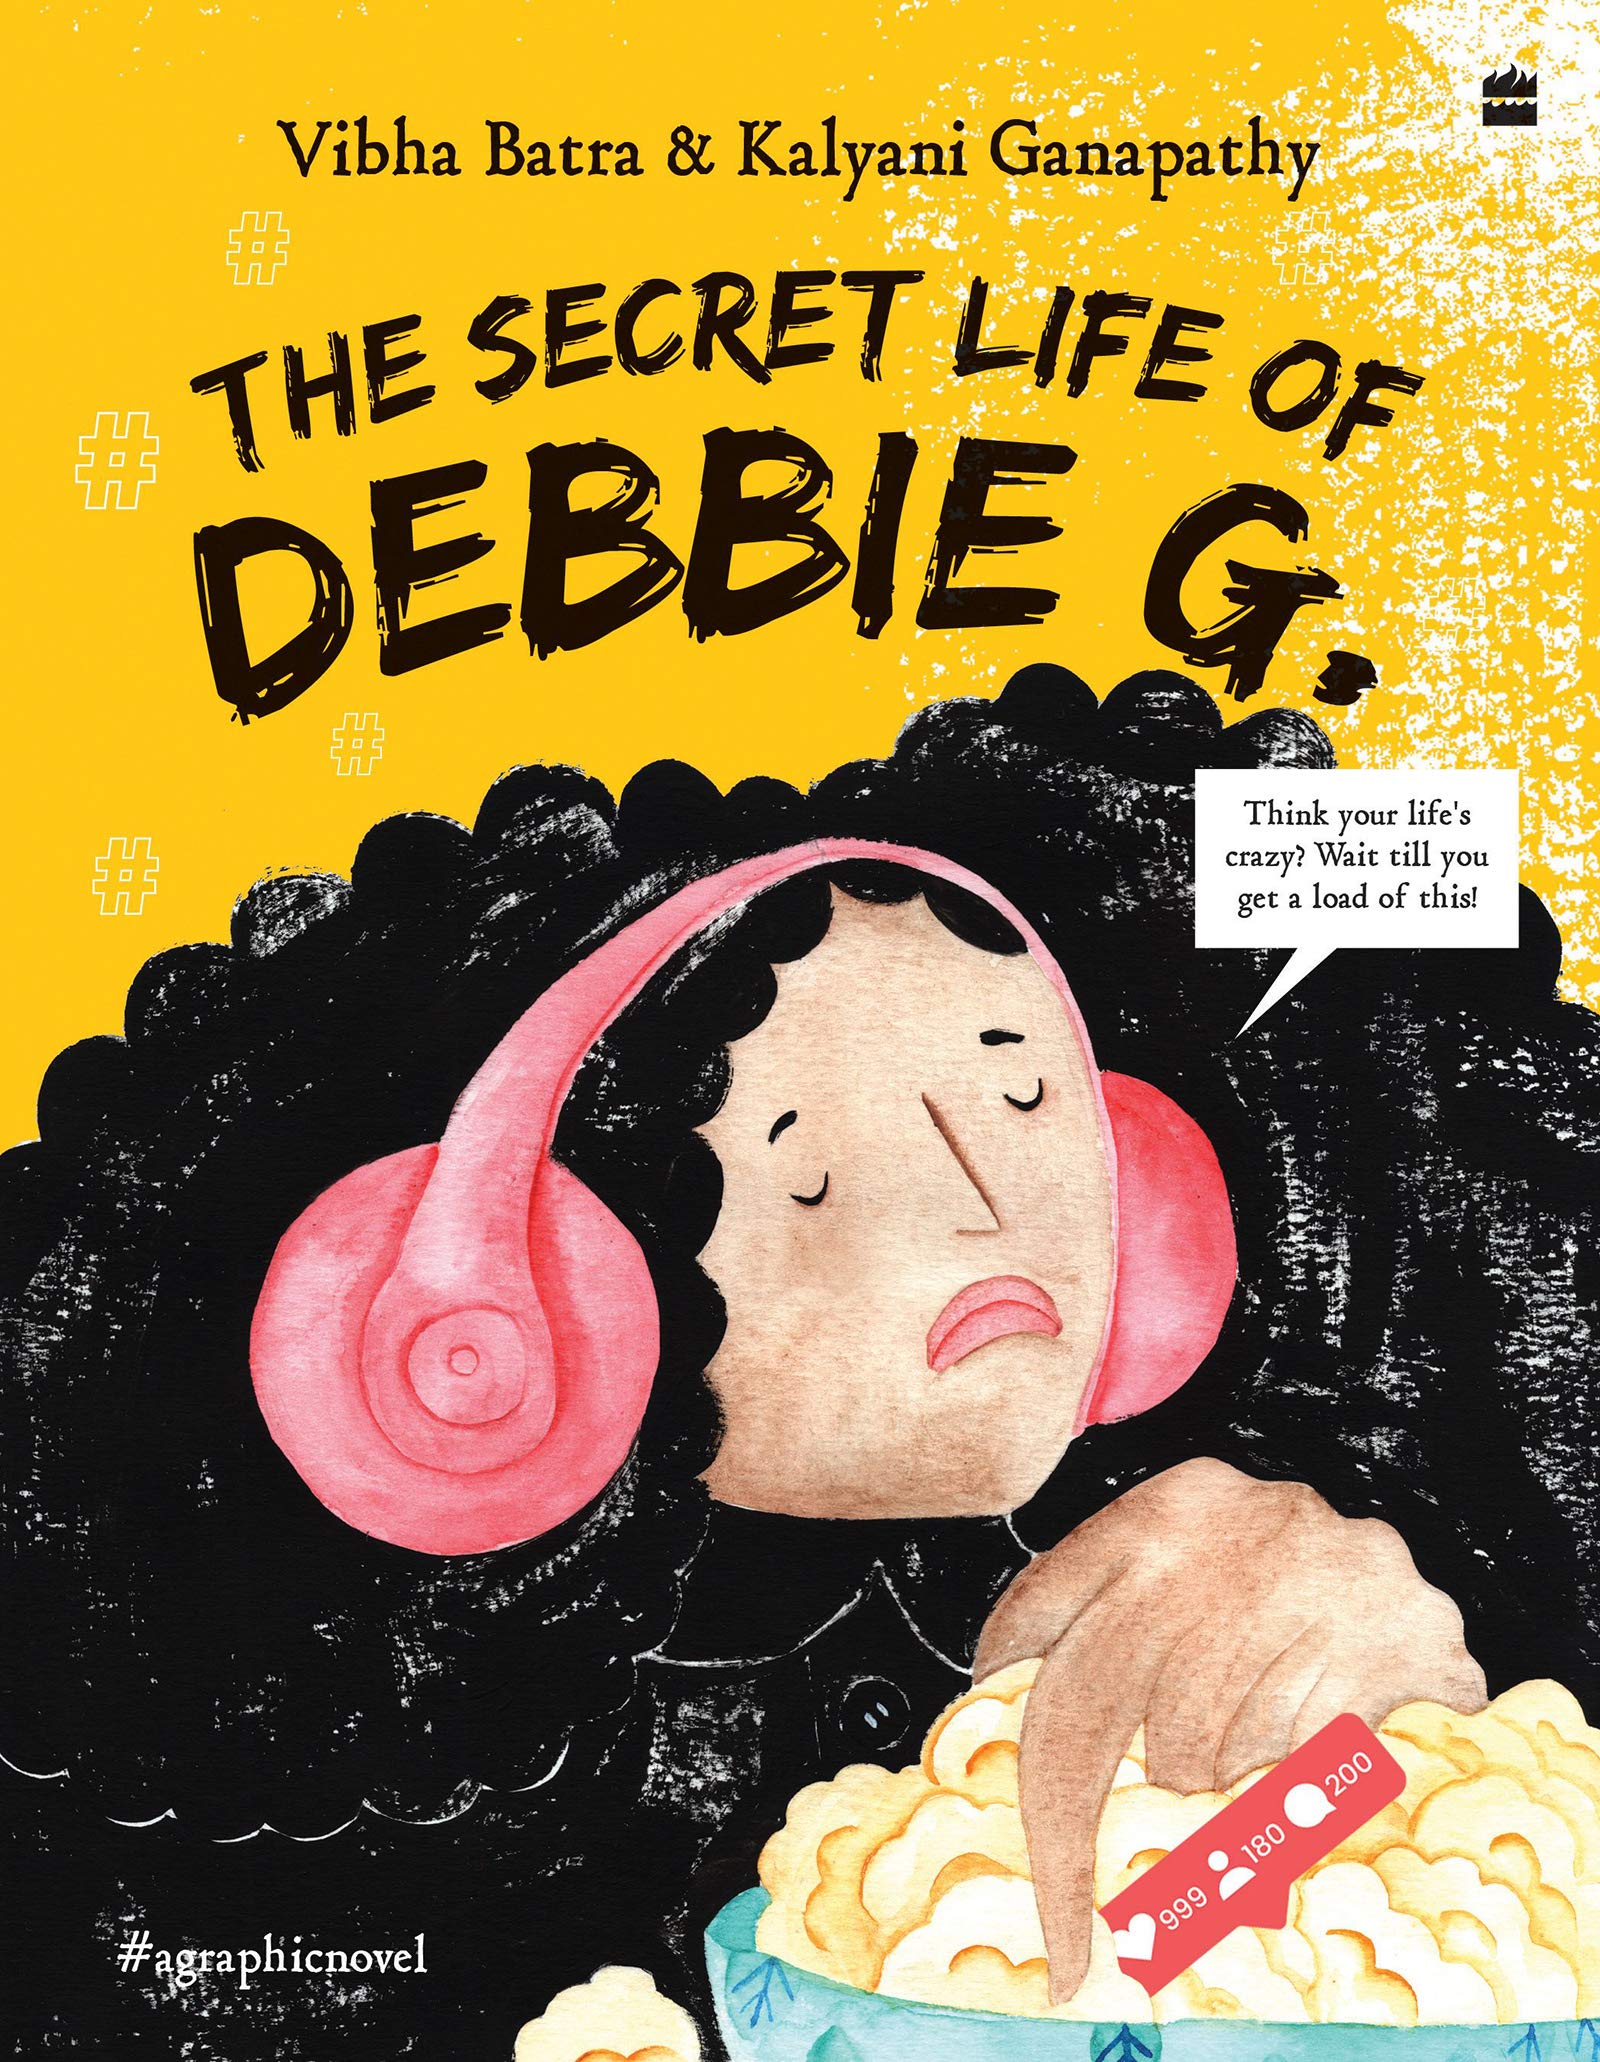 The Secret Life of Debbie G by Vibha Batra